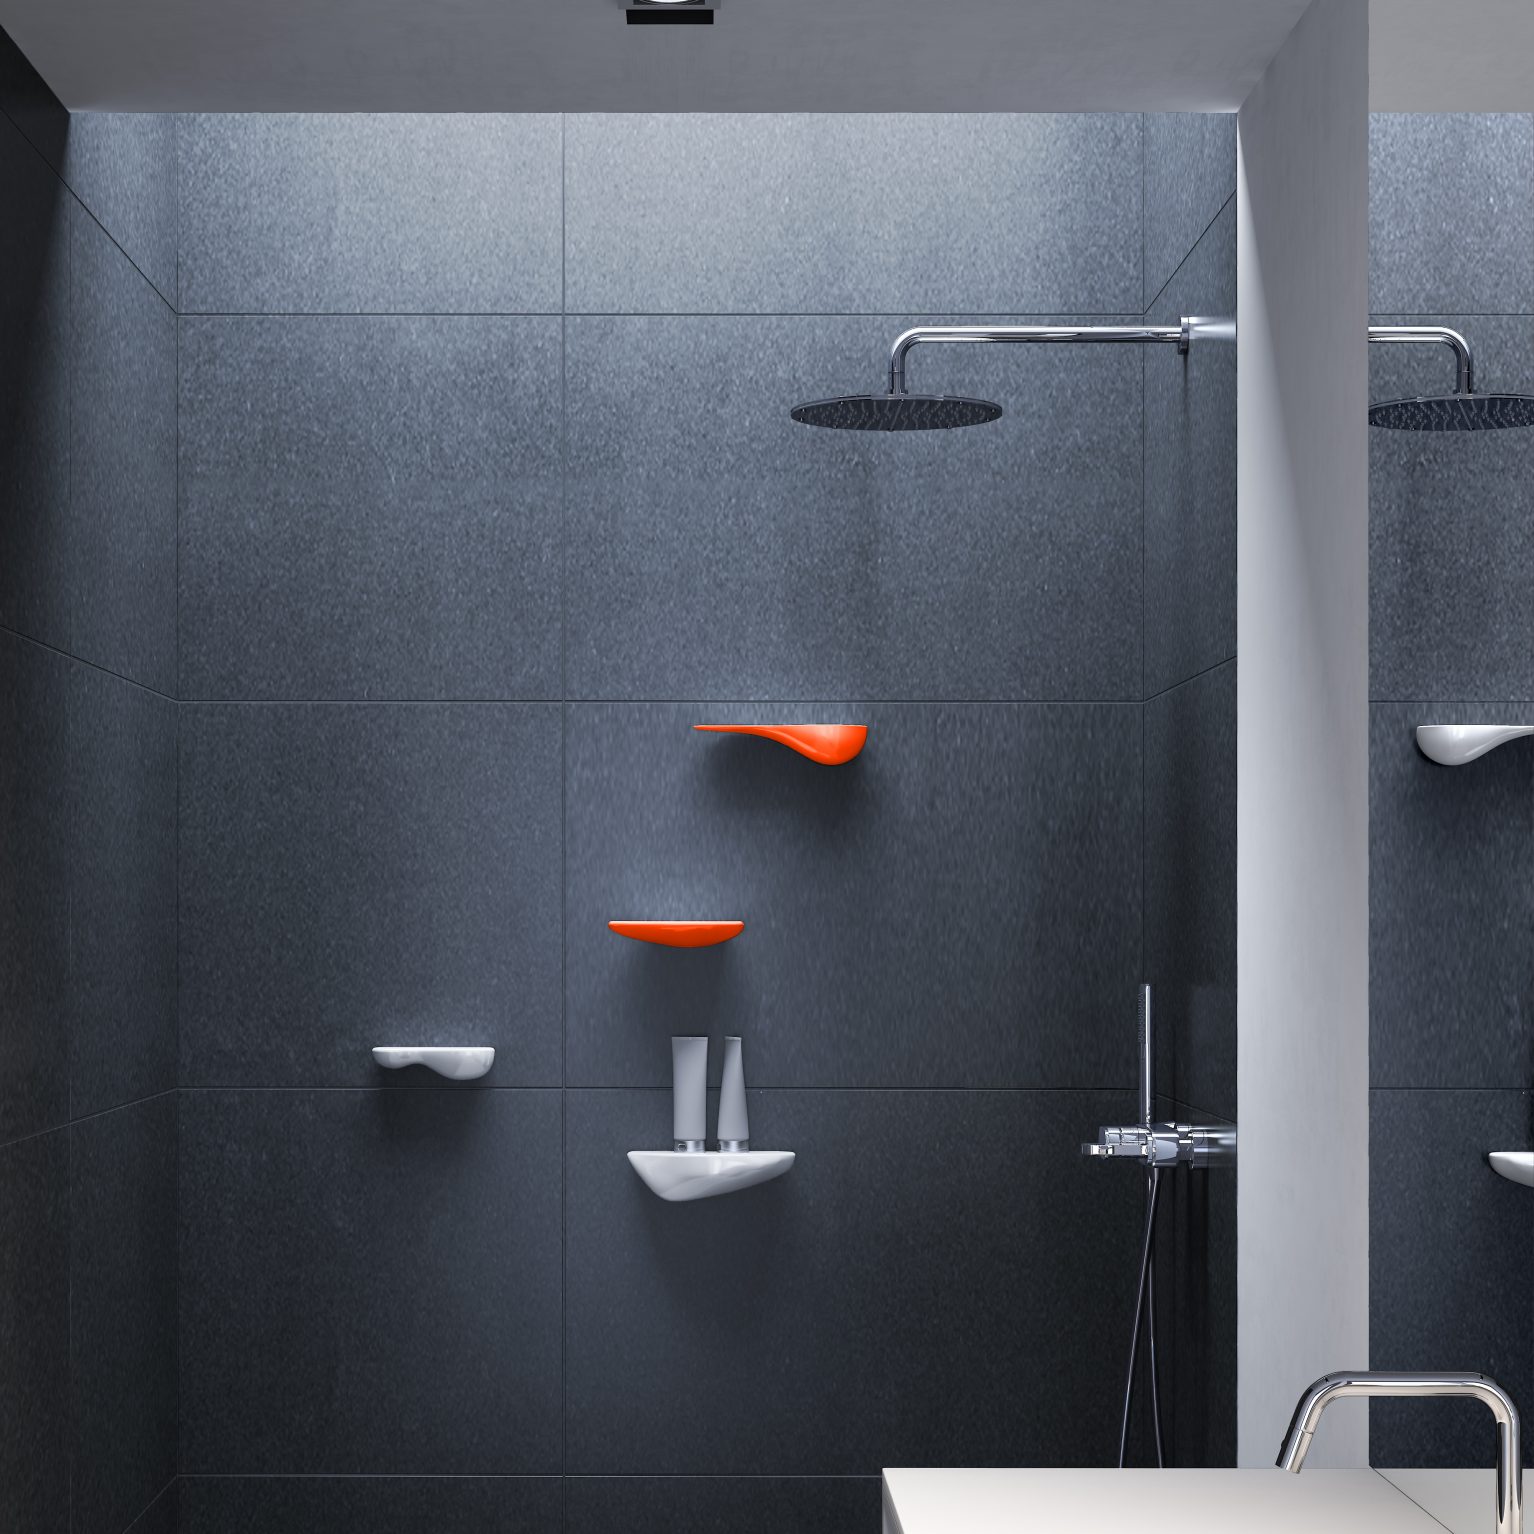 planchet-accessoires-wit-oranje-keramiek-toilet-badkamer-luxe-sanitair-Cliff-clou-klein-plankje-planchetje-Sp-shadow-douche-shower